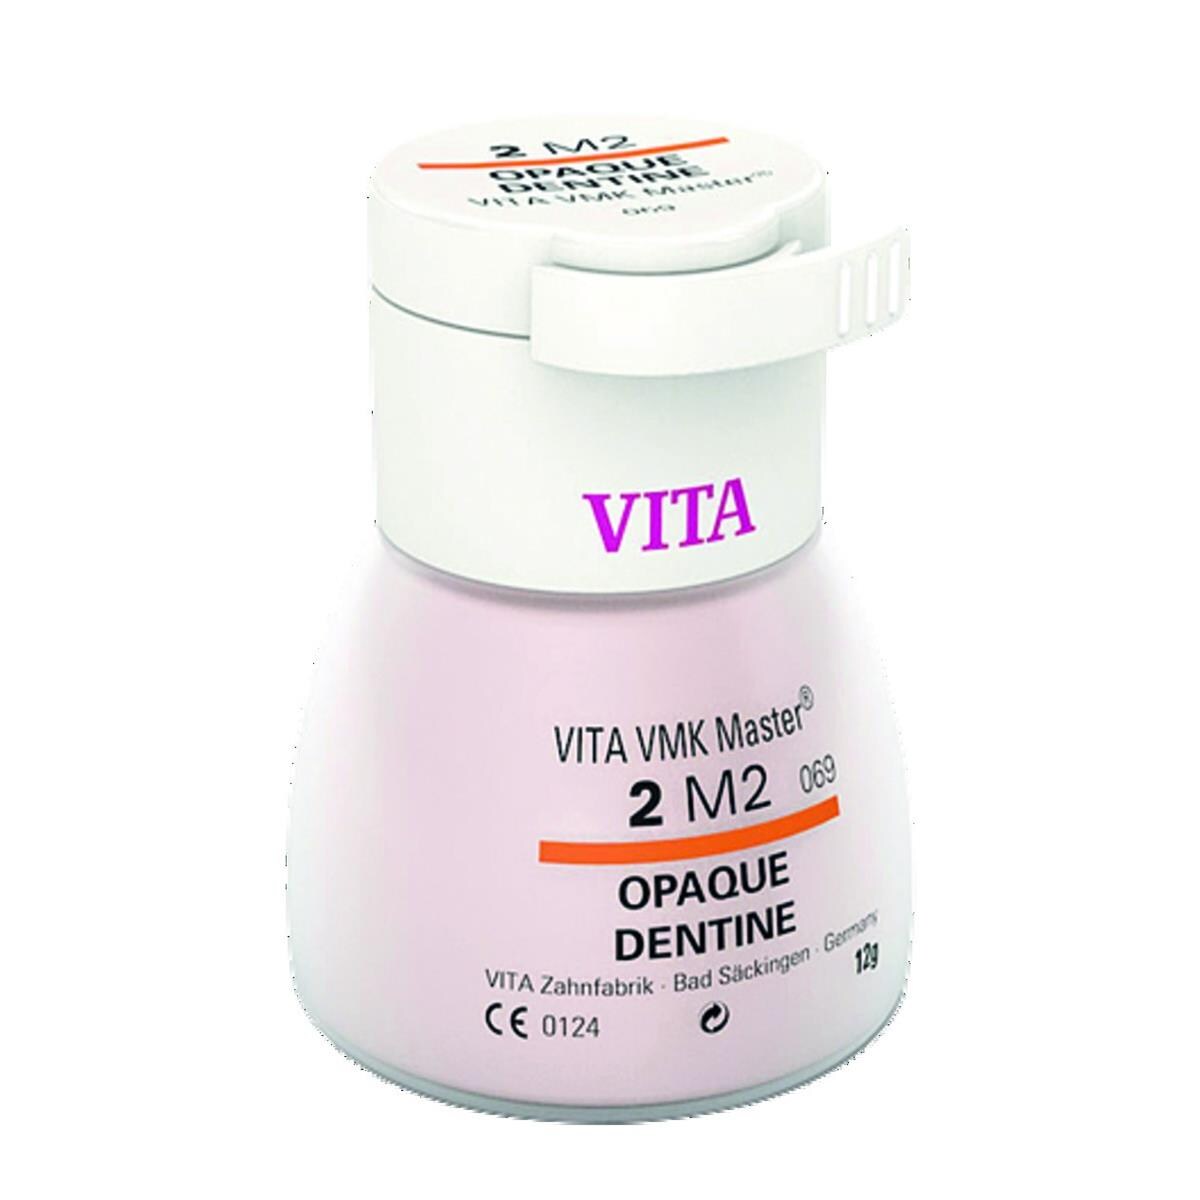 VMK Master VITA - Dentine Opaque - 4M2 - Le flacon de 12 g